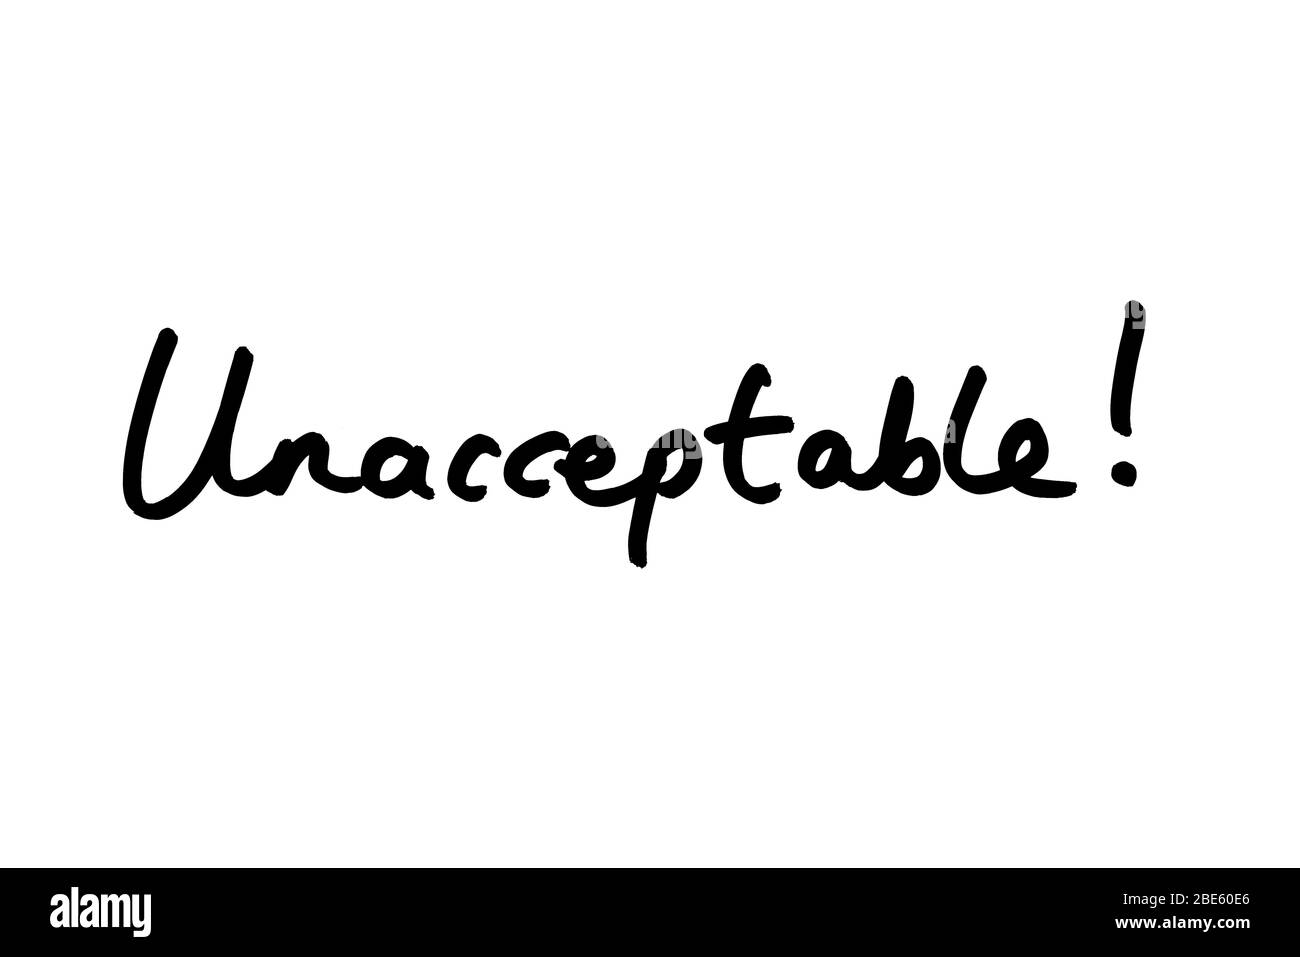 Unacceptable! handwritten on a white background. Stock Photo